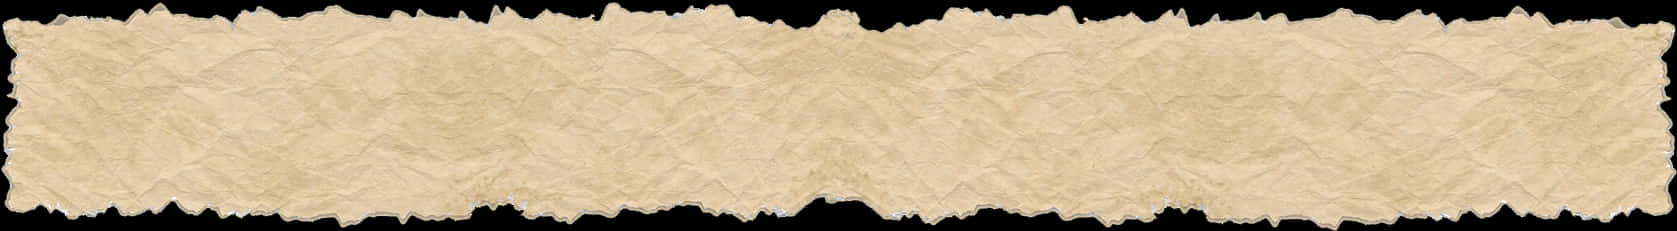 Horizontal Torn Paper Edge Texture PNG